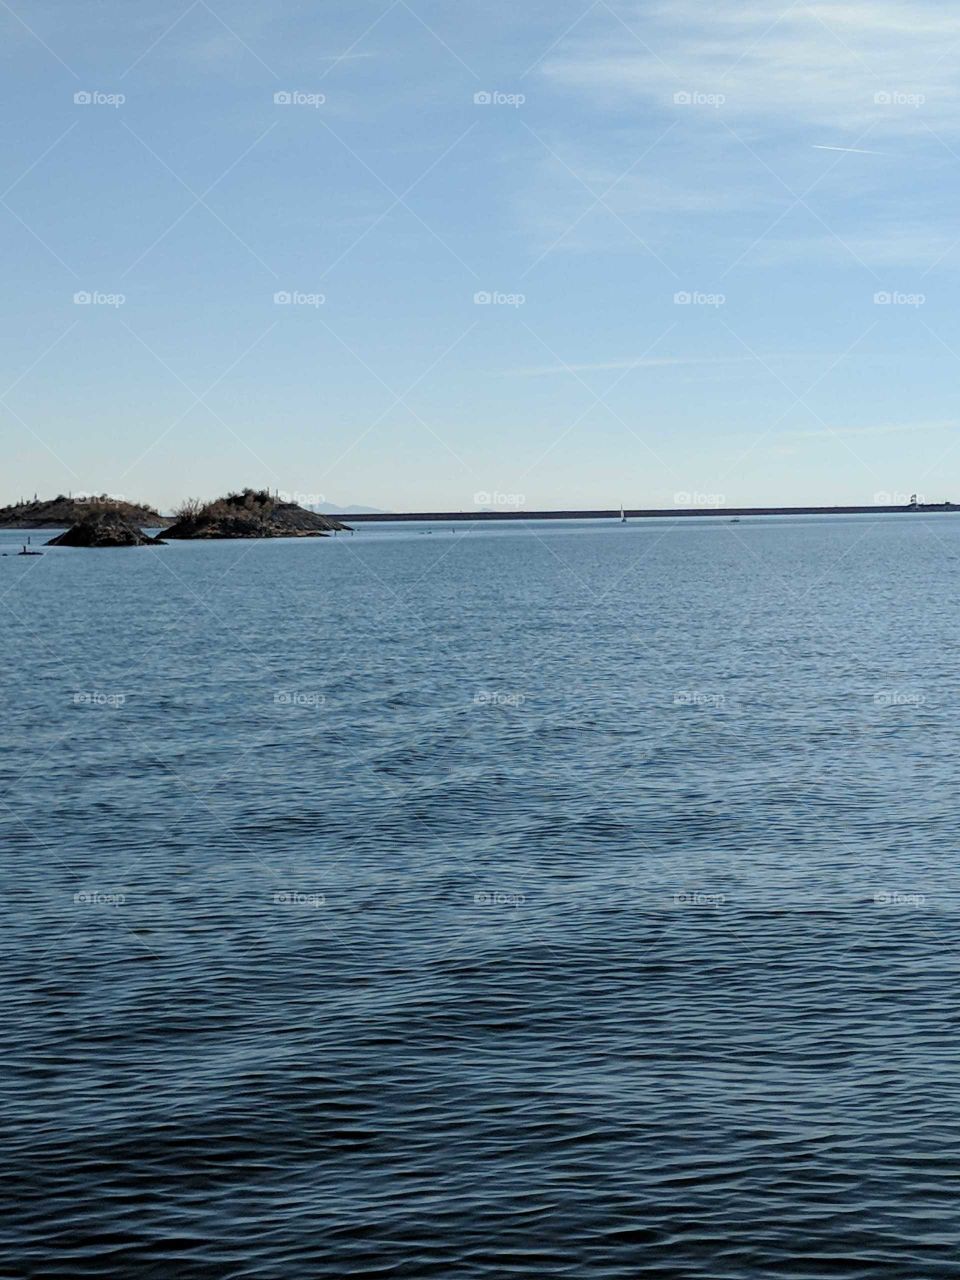 island on lake